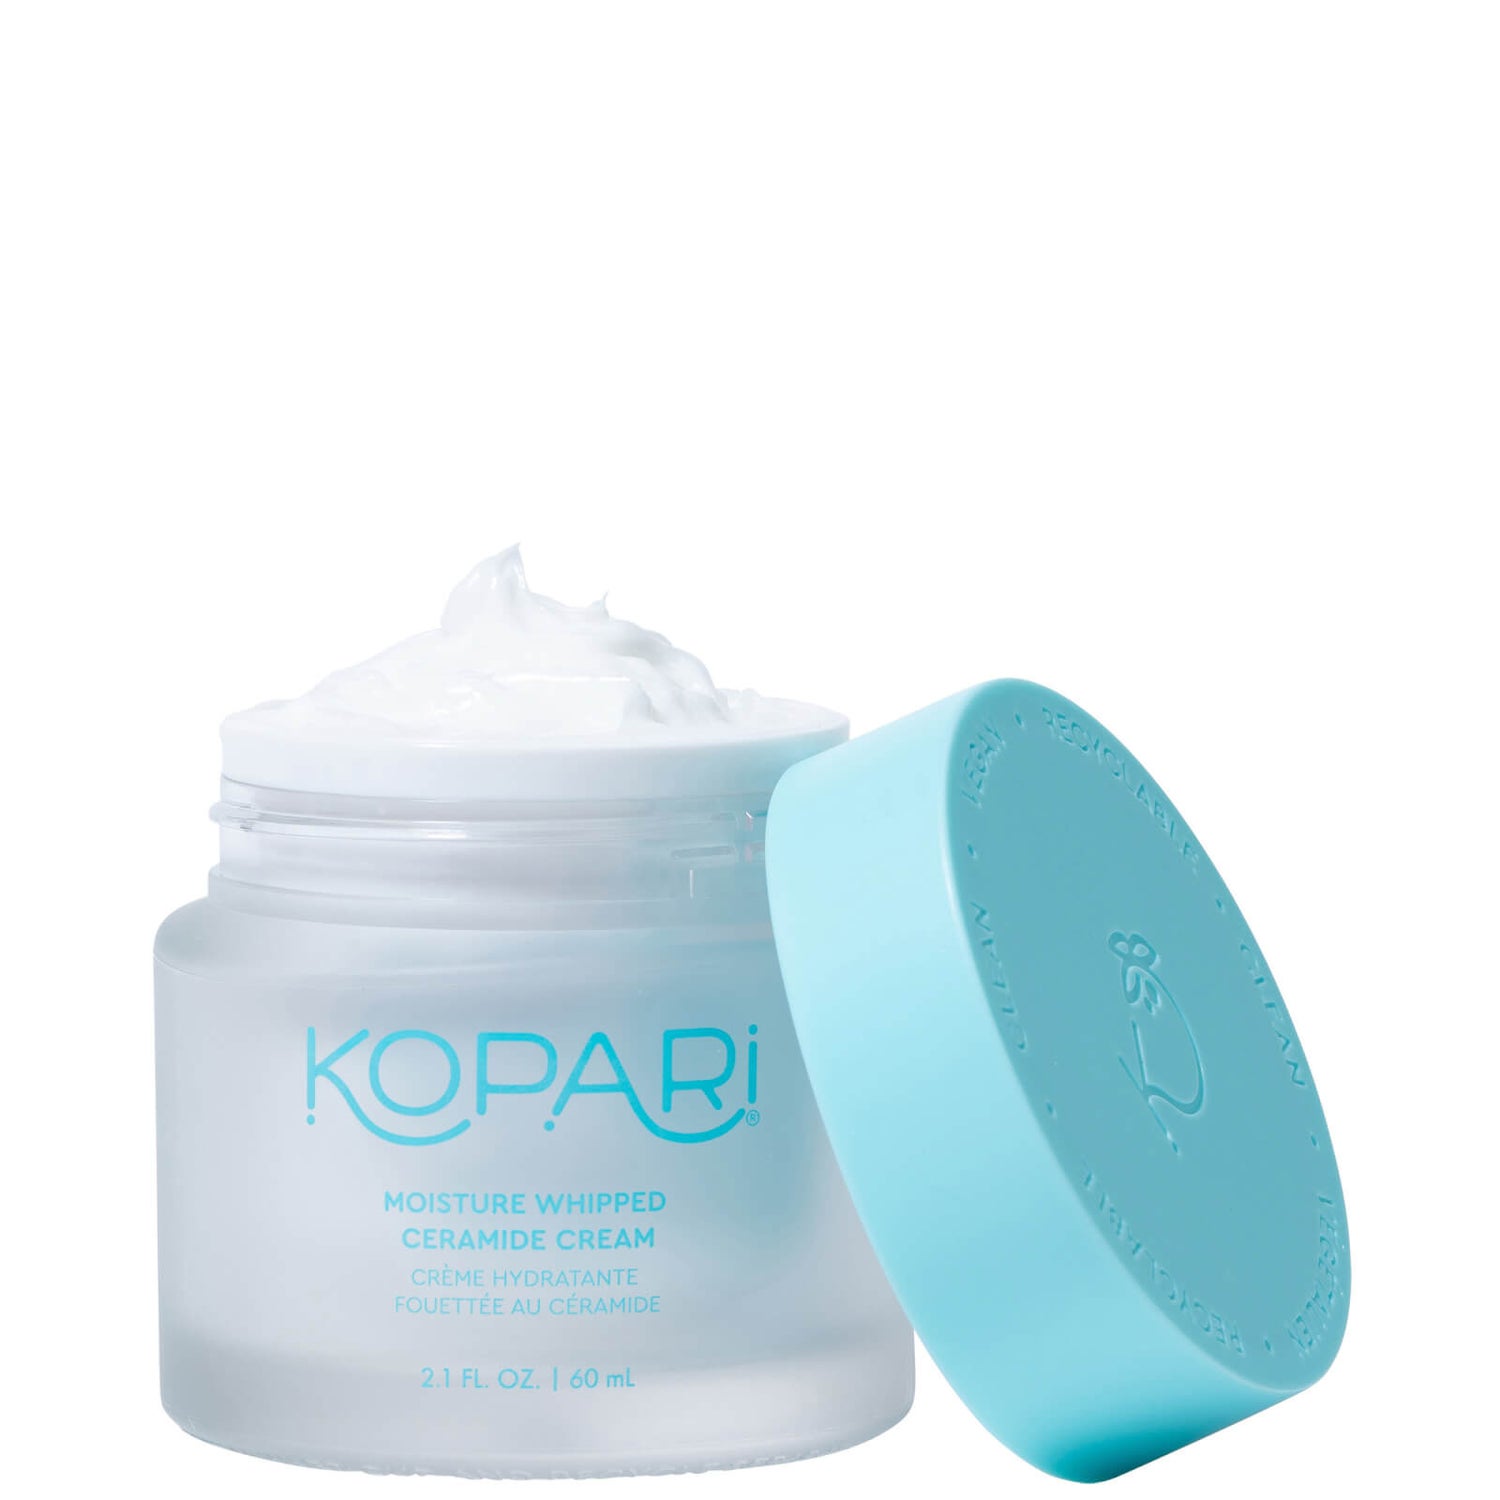 Kopari Beauty Moisture Whipped Ceramide Cream 60ml